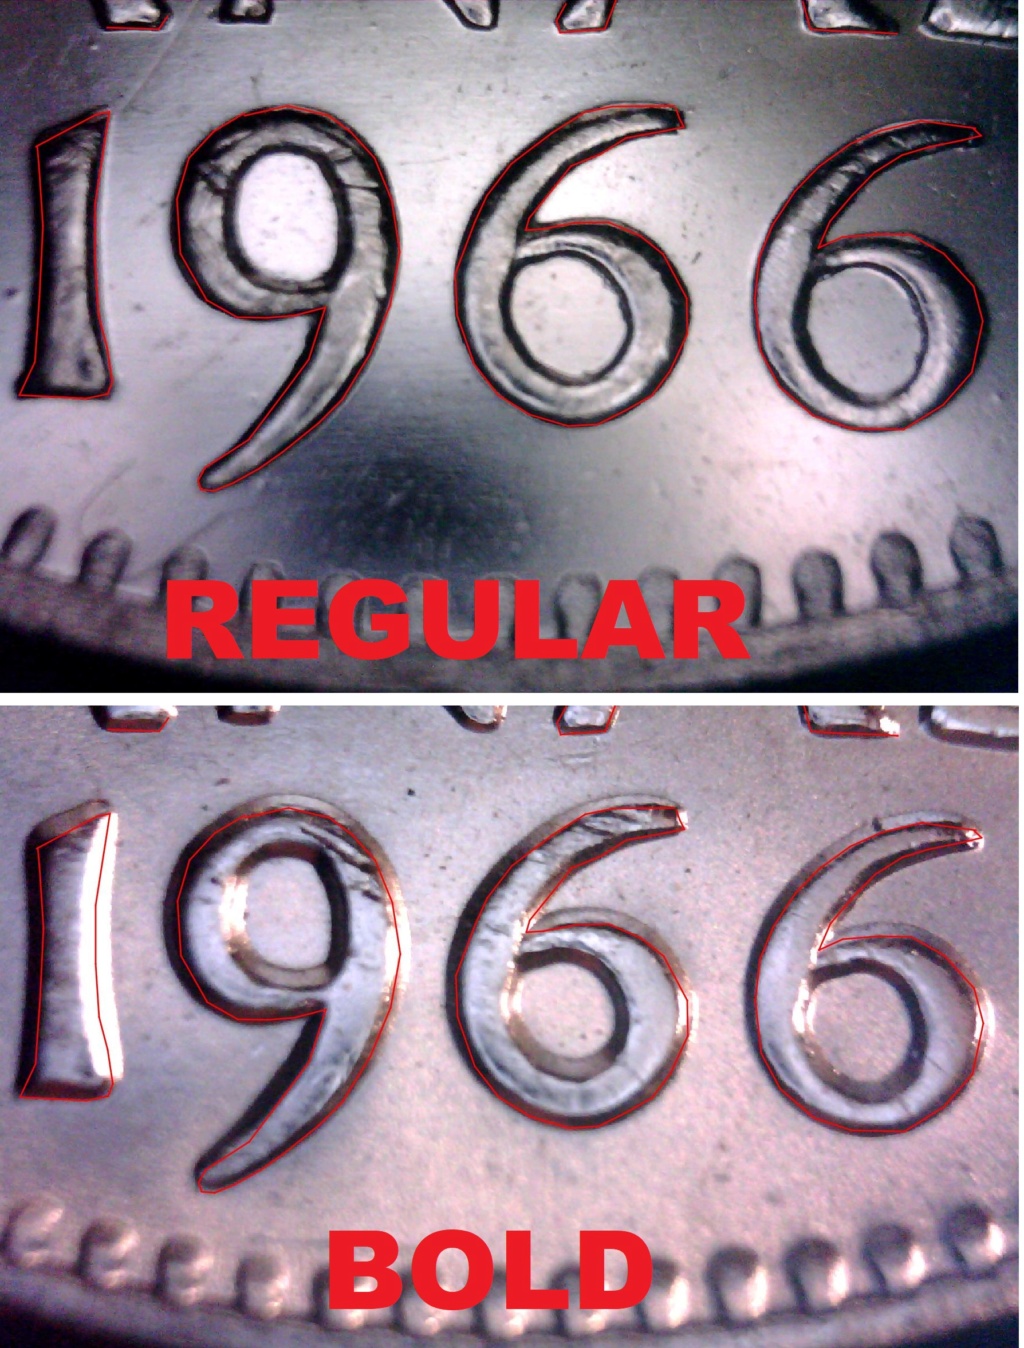 1966 - Grosse Date (Bold Date) Image215